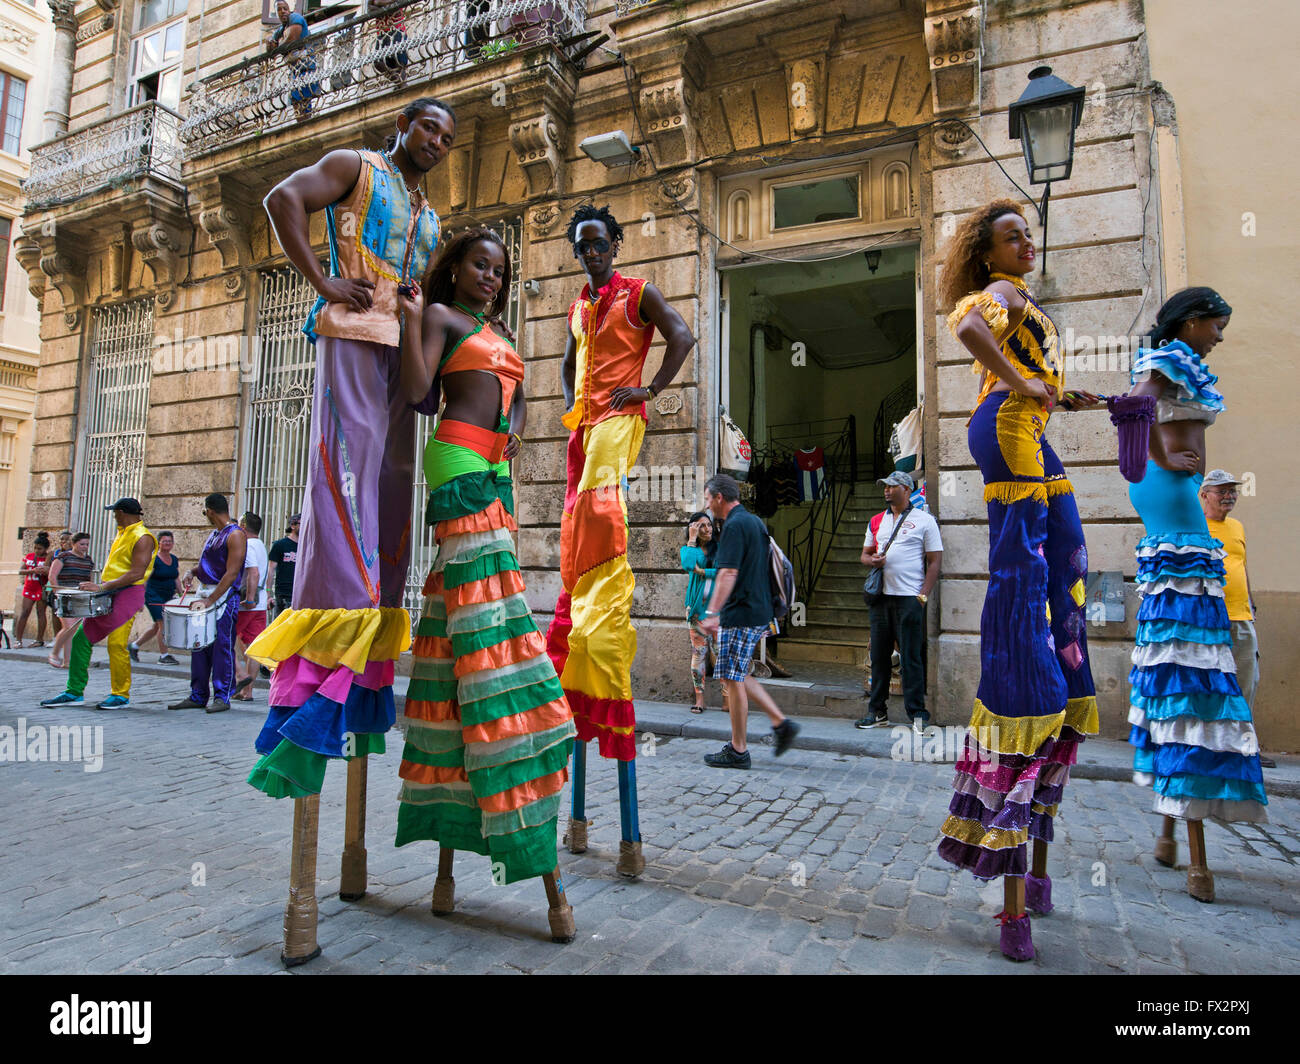 Horizontal portrait of stilt walkers posing for a photograph in Havana, Cuba. Stock Photo